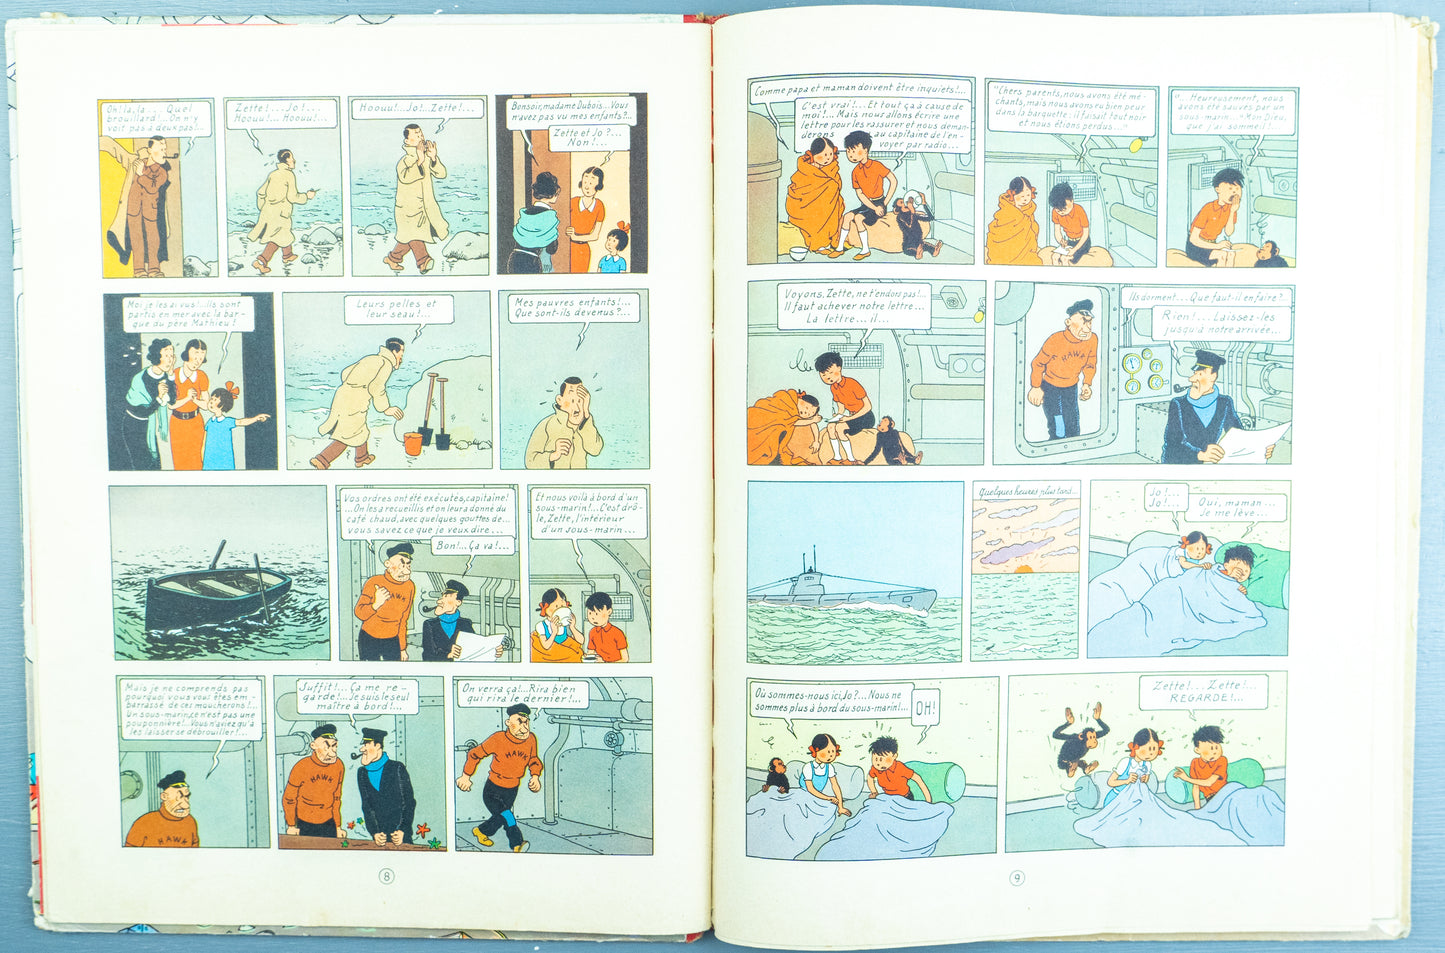 Manitoba Ne Repond Plus 1956 Casterman Early HB Edition Jo Zette & Jocko/Tintin by Herge